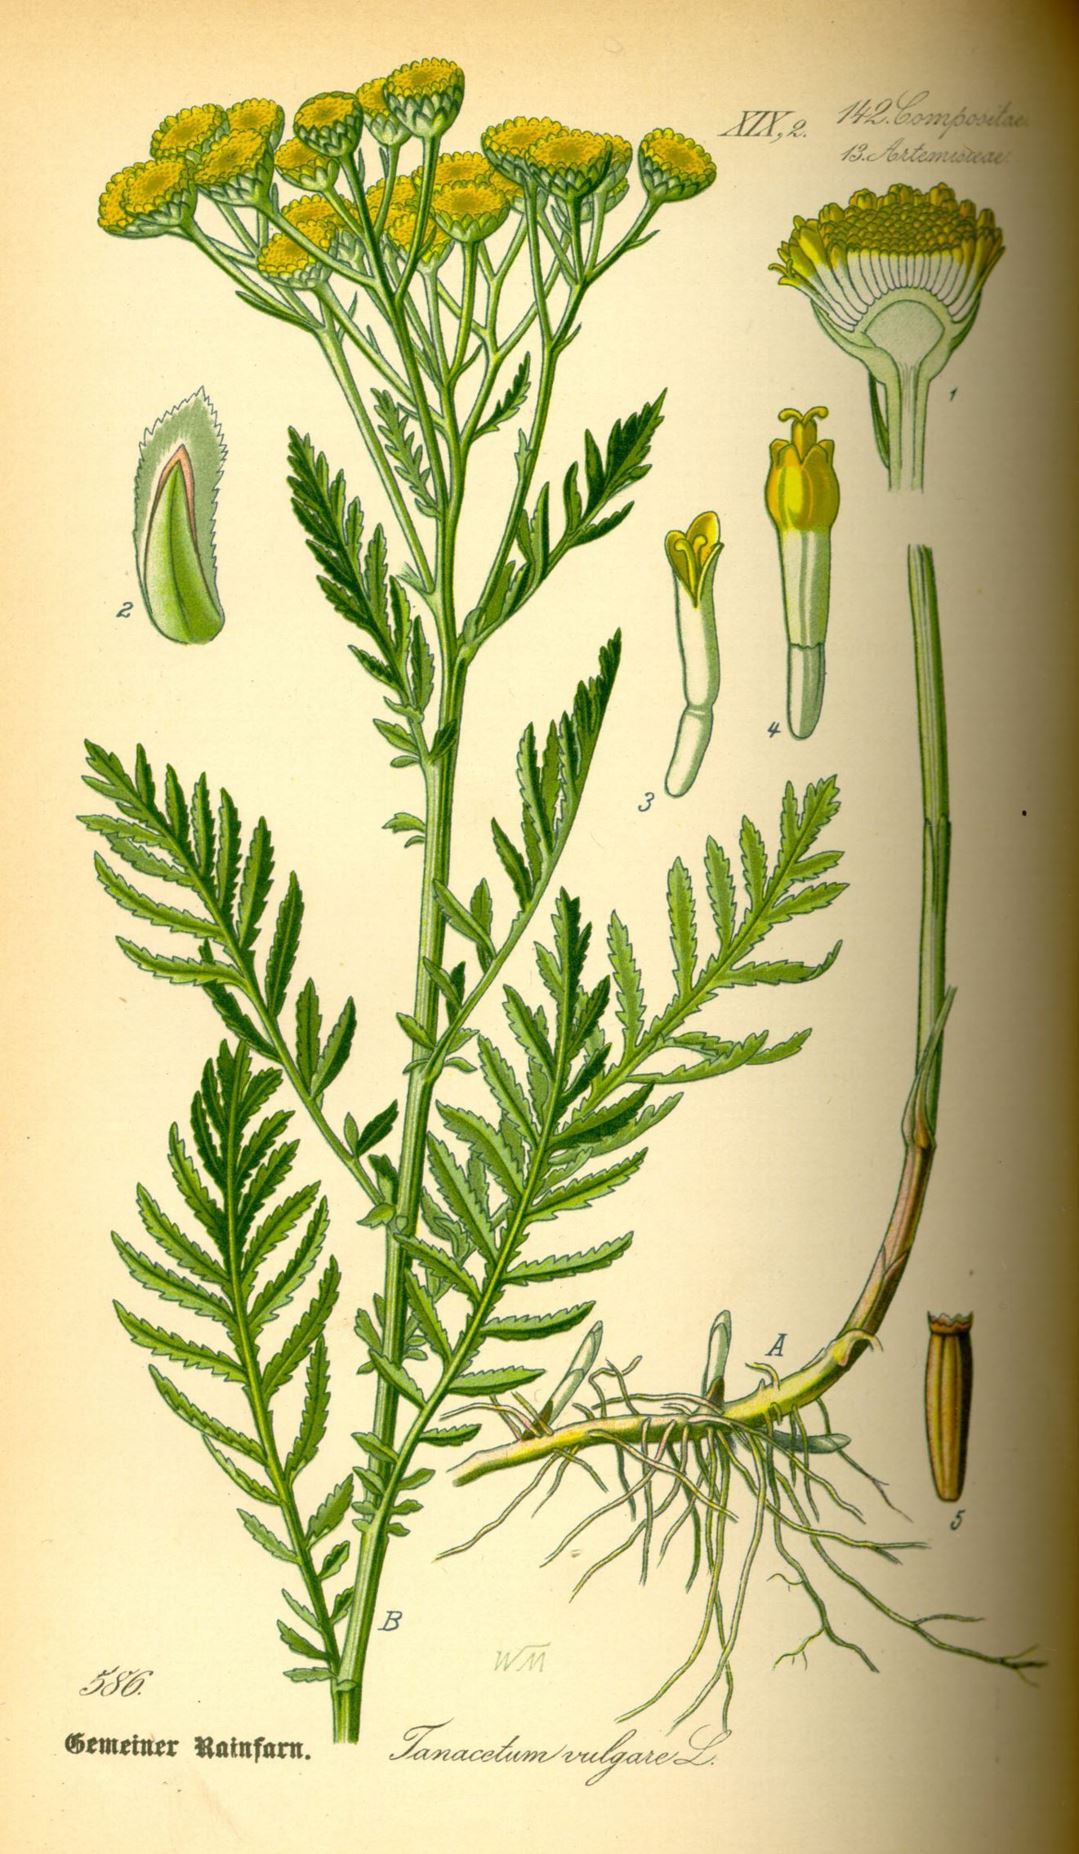 Tanacetum vulgare - Boerenwormkruid, Tansy, Golden buttons